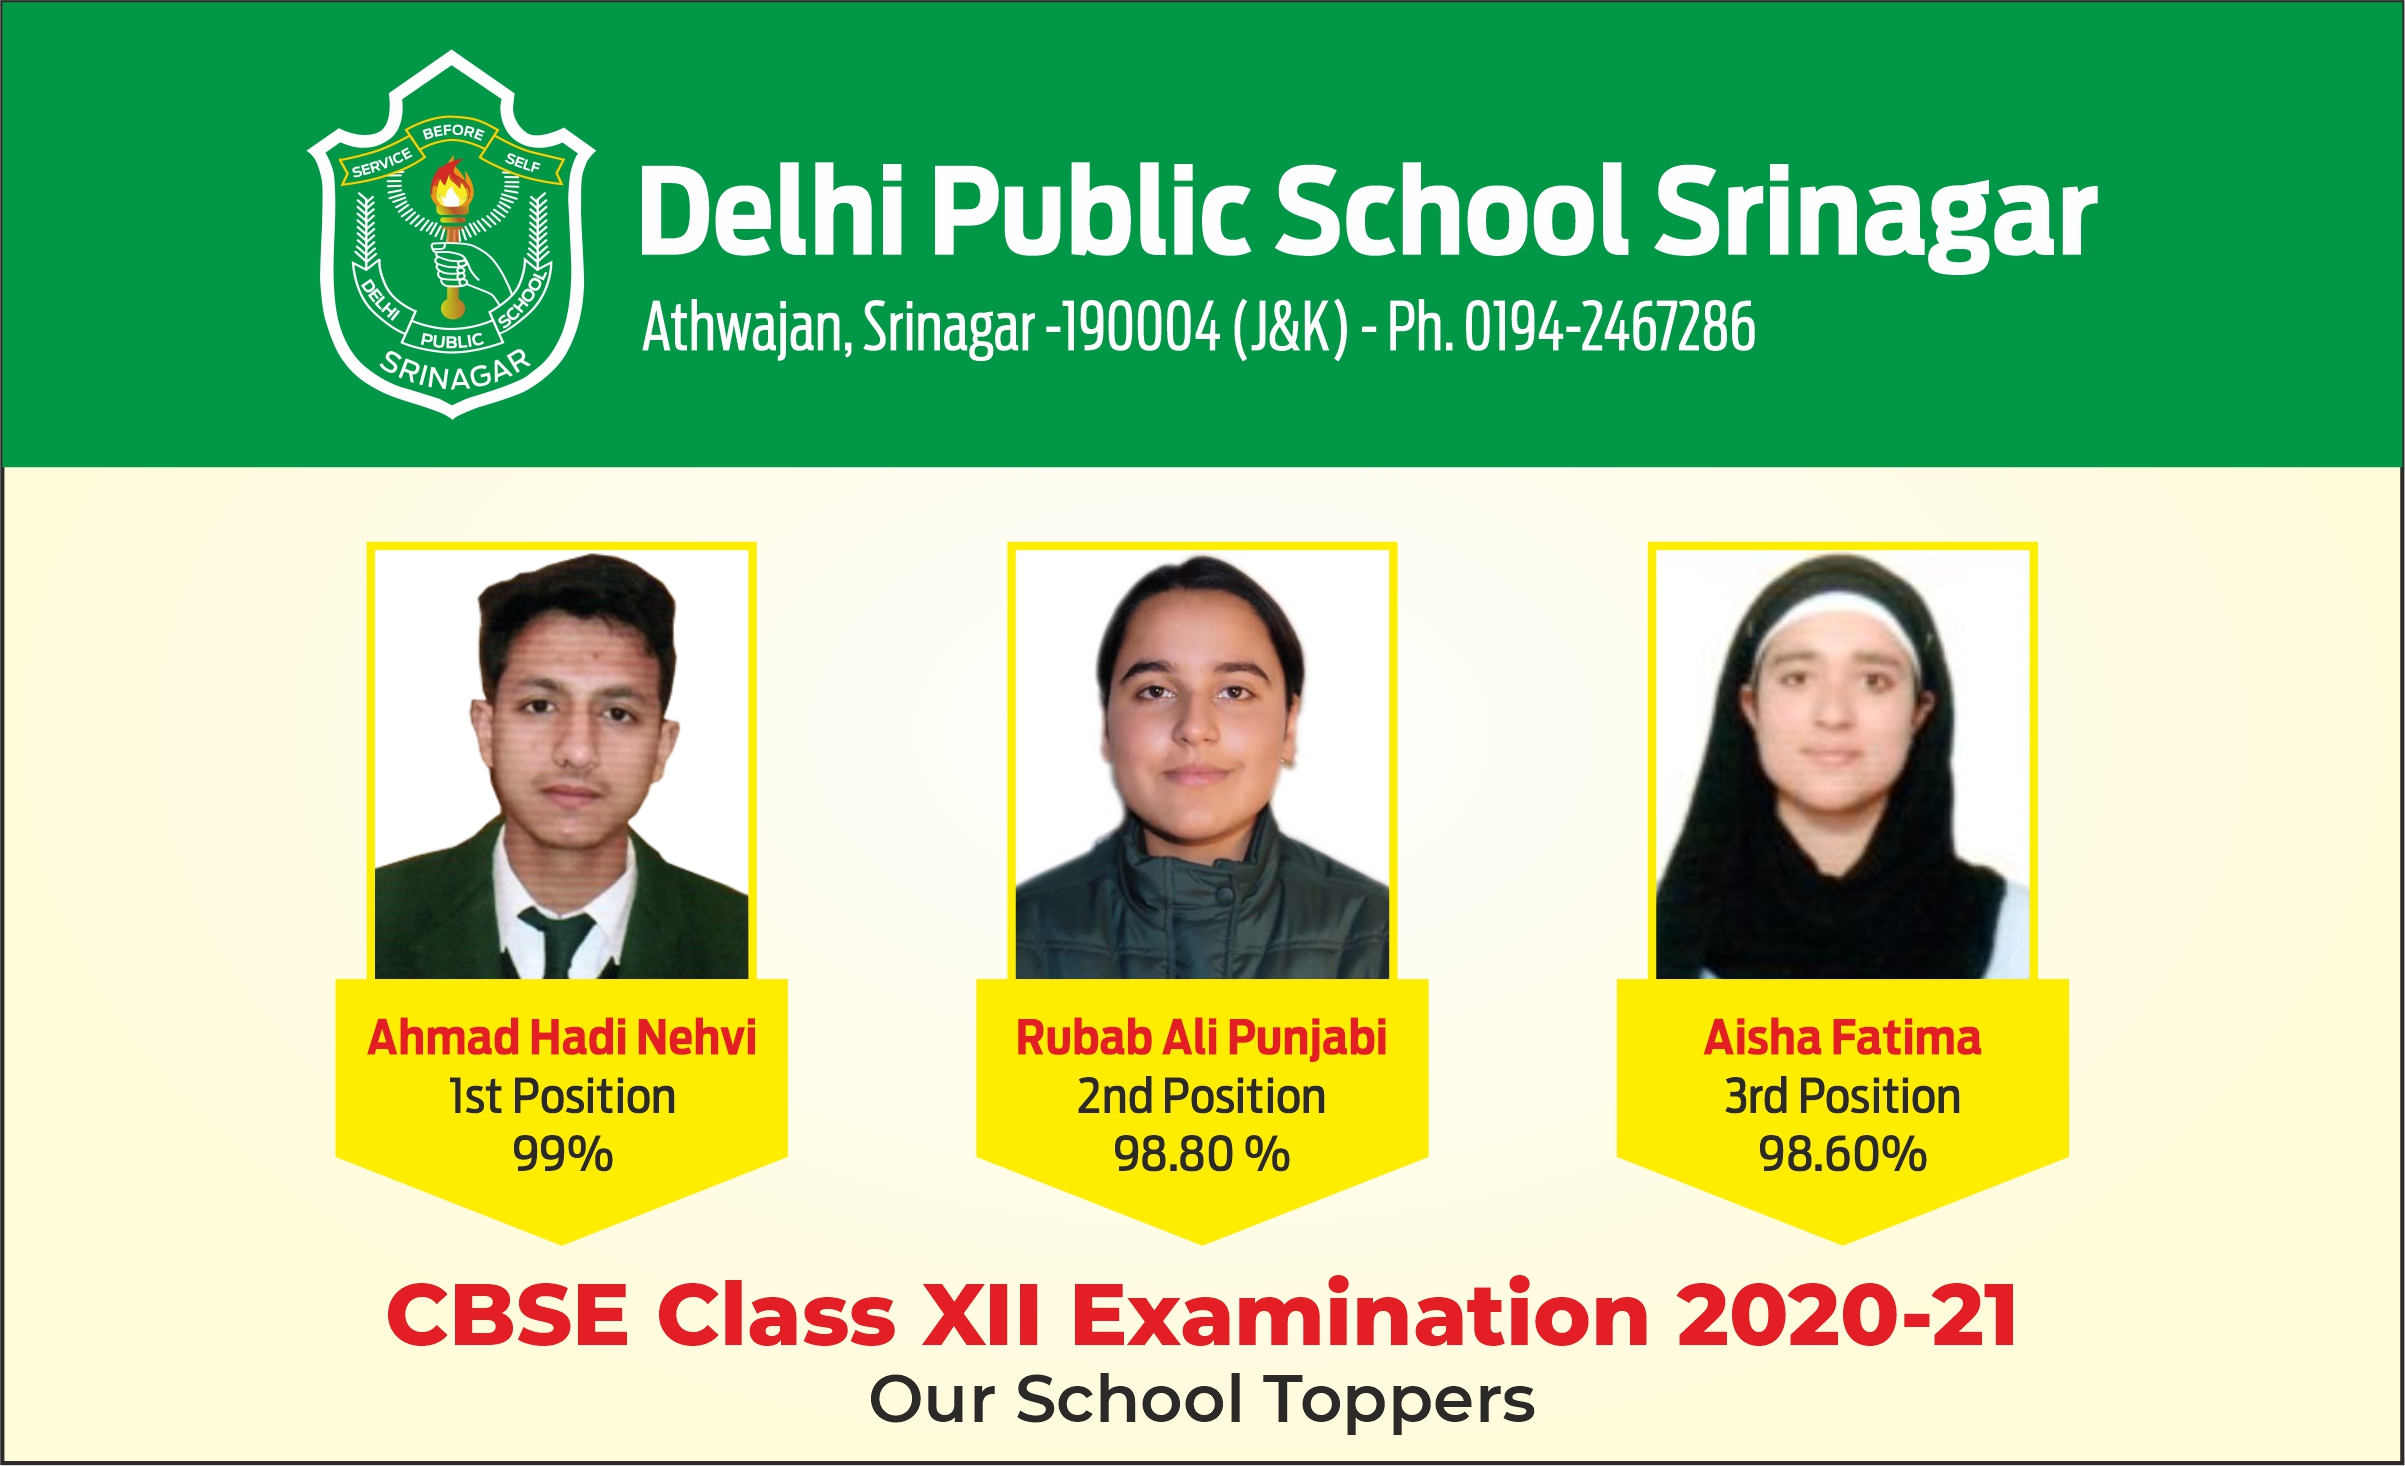 DPS Srinagar records 100 % results in CBSE Class XII exam